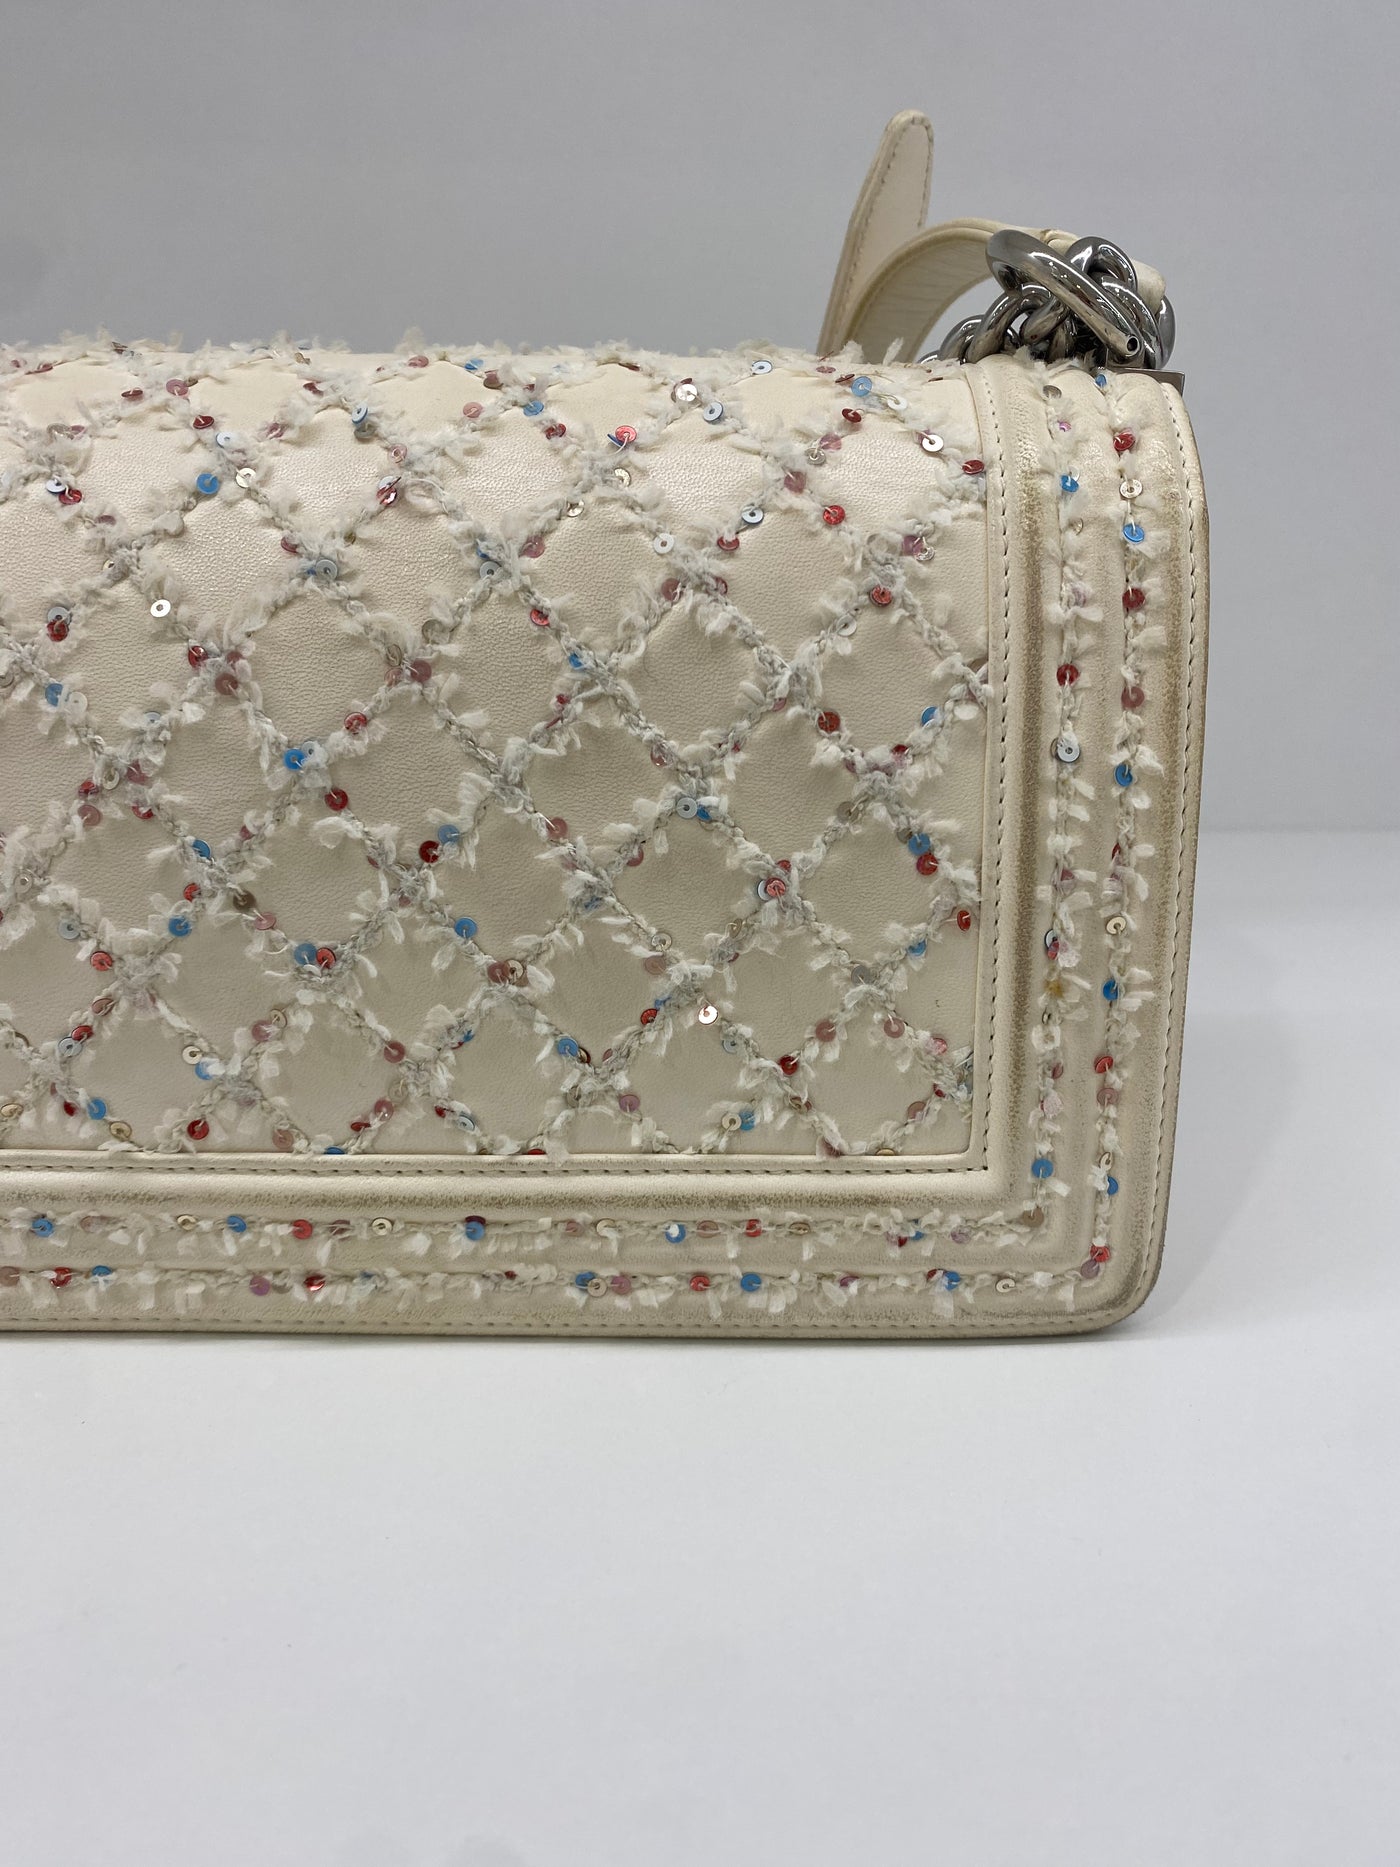 Chanel Boy Bag Medium - Off White Sequins SHW (series 24)